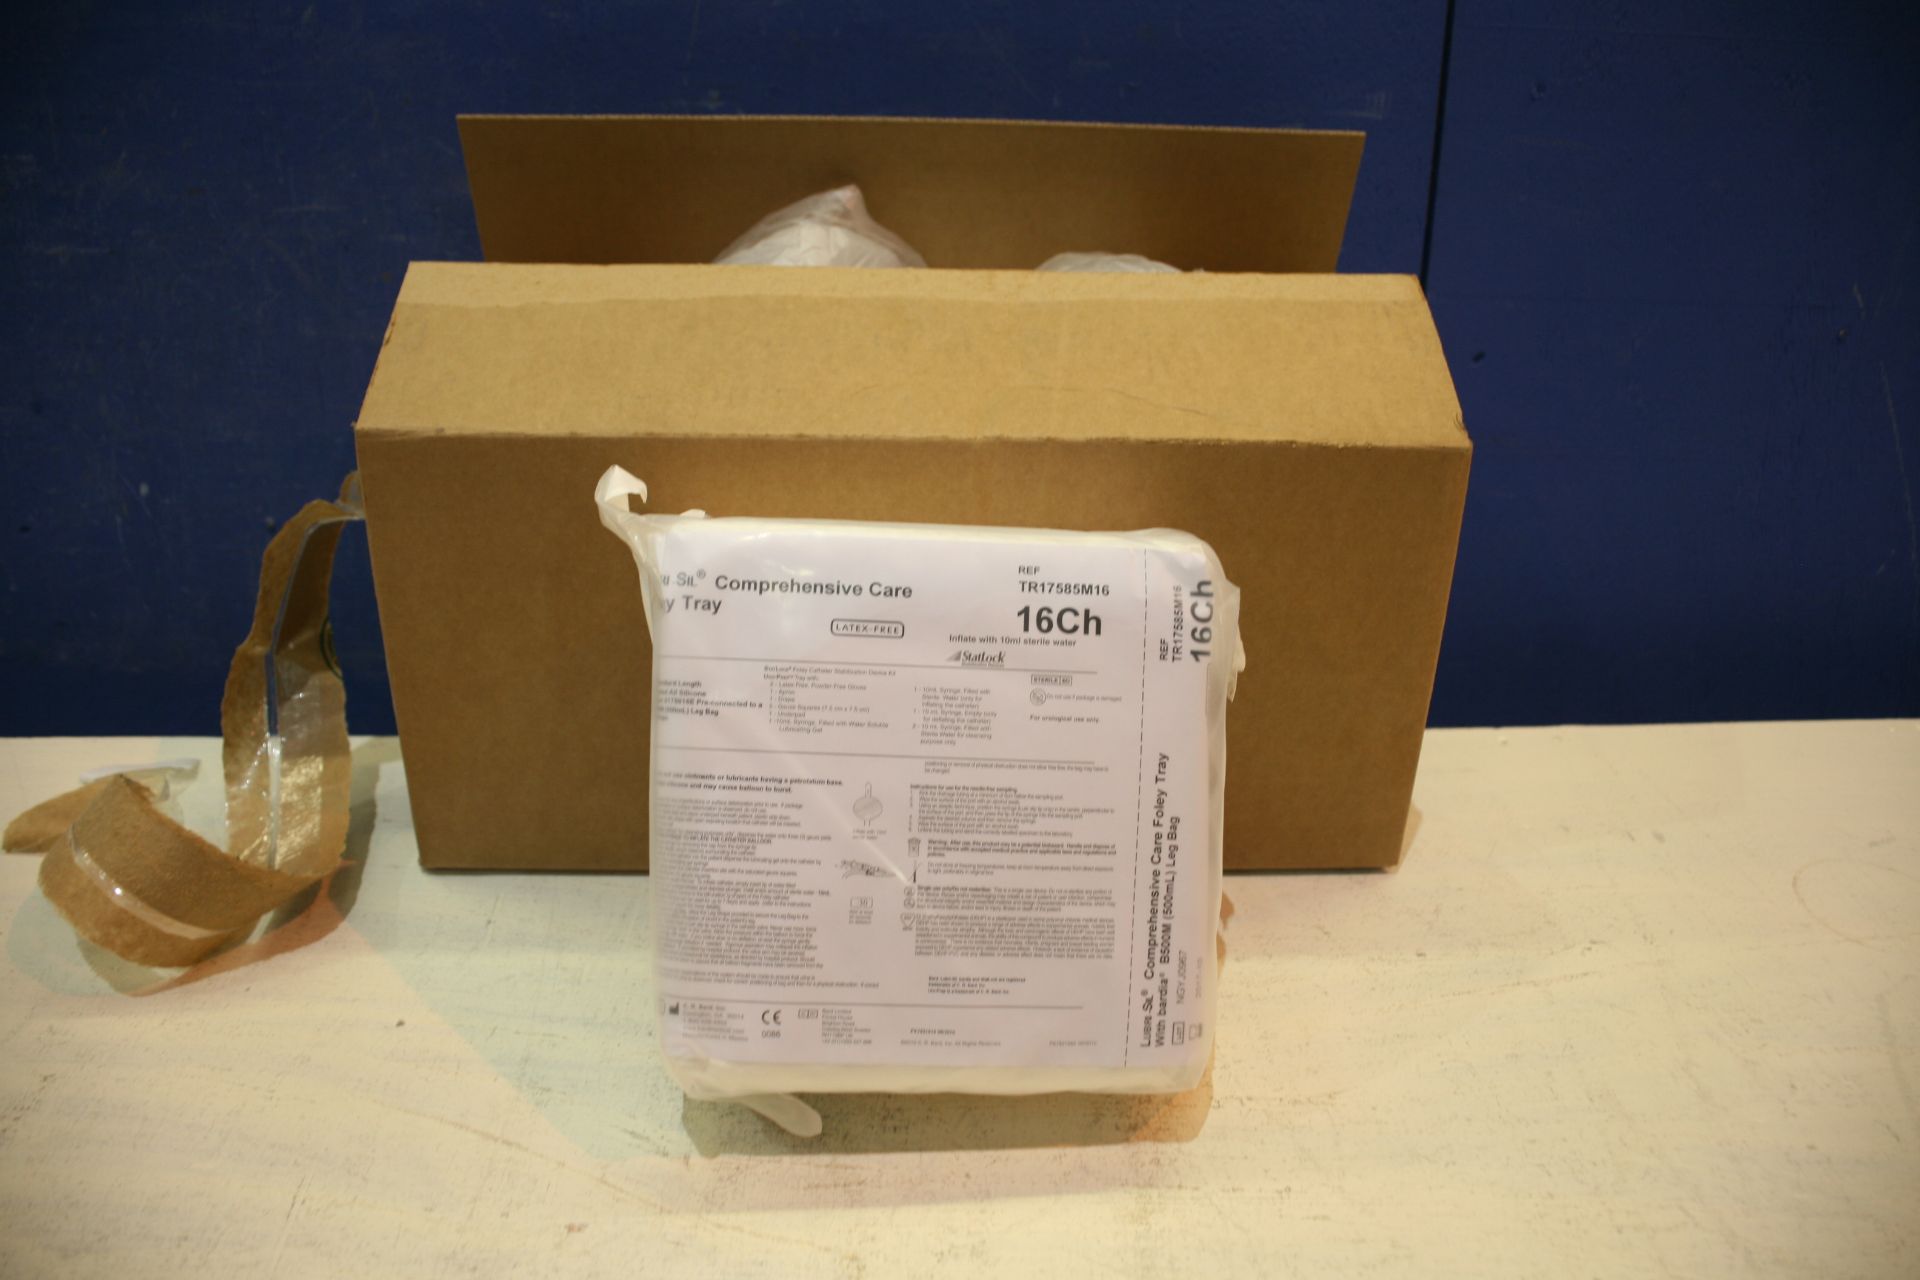 Box Of Bard Lubri-Sil Comprehensive Care Foley Tray